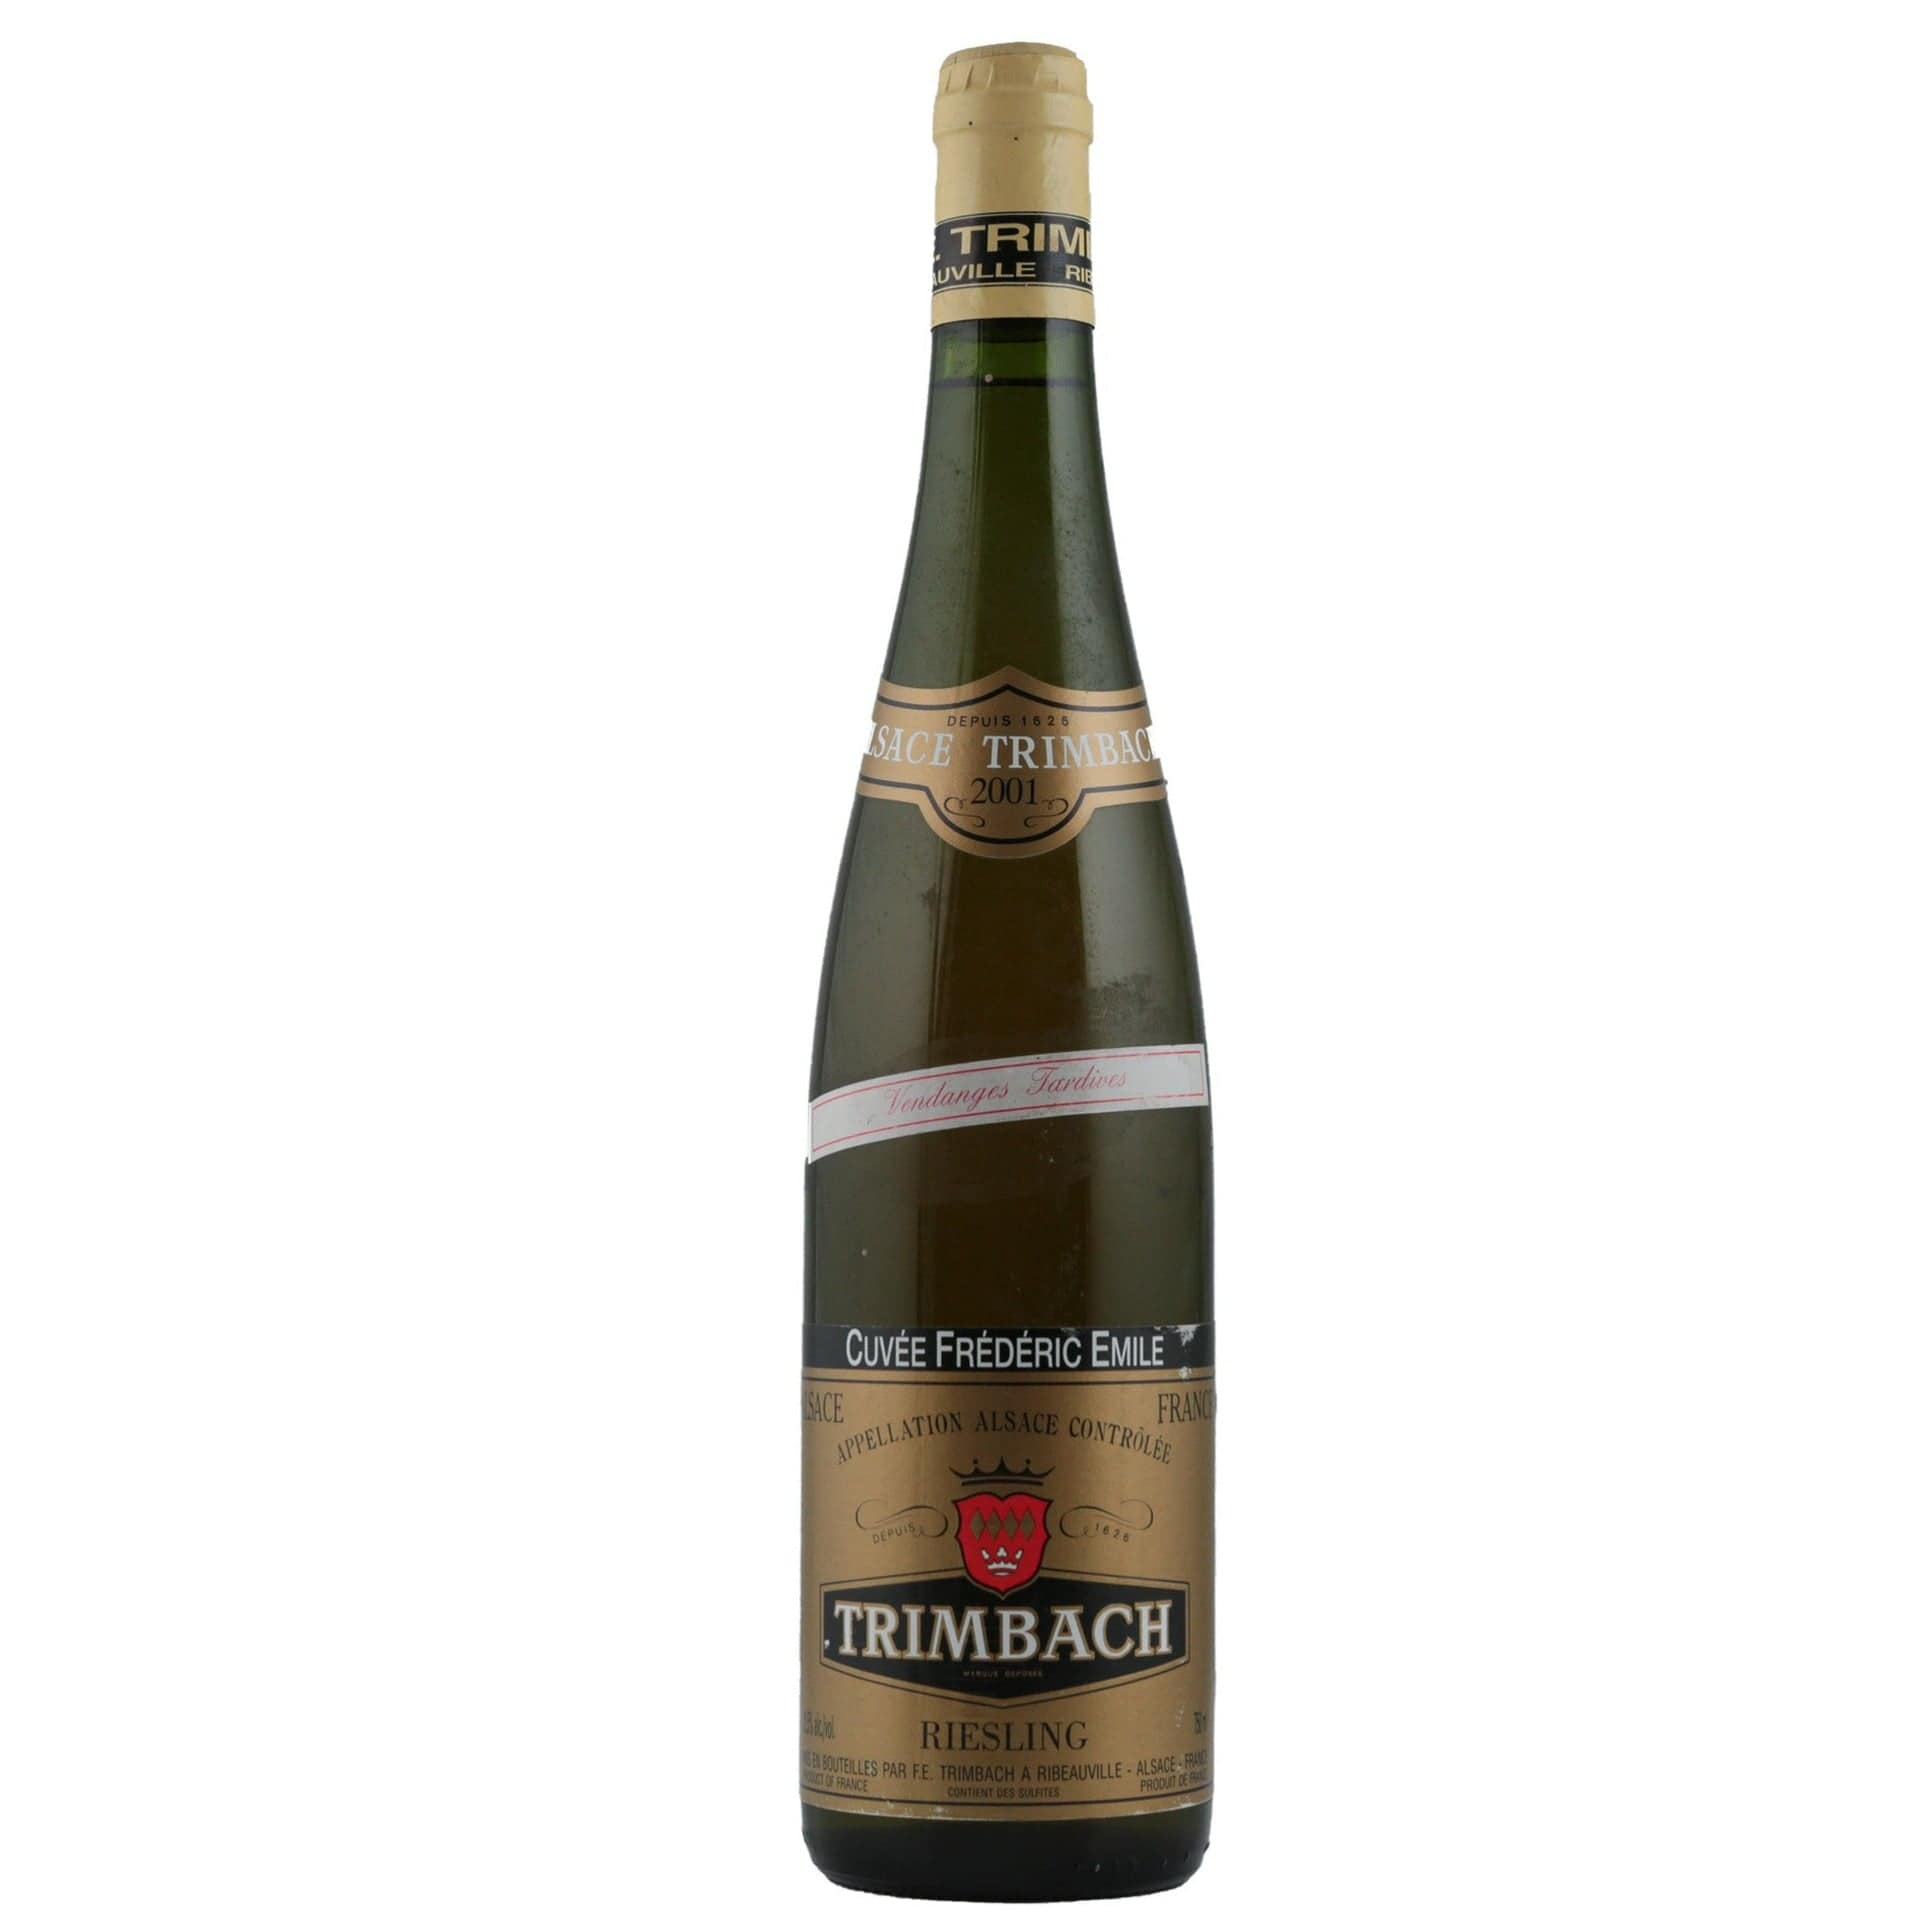 Single bottle of Sparkling wine Maison Trimbach, Frederic Emile (Vendages Tardives), Alsace, 2001 100% Riesling